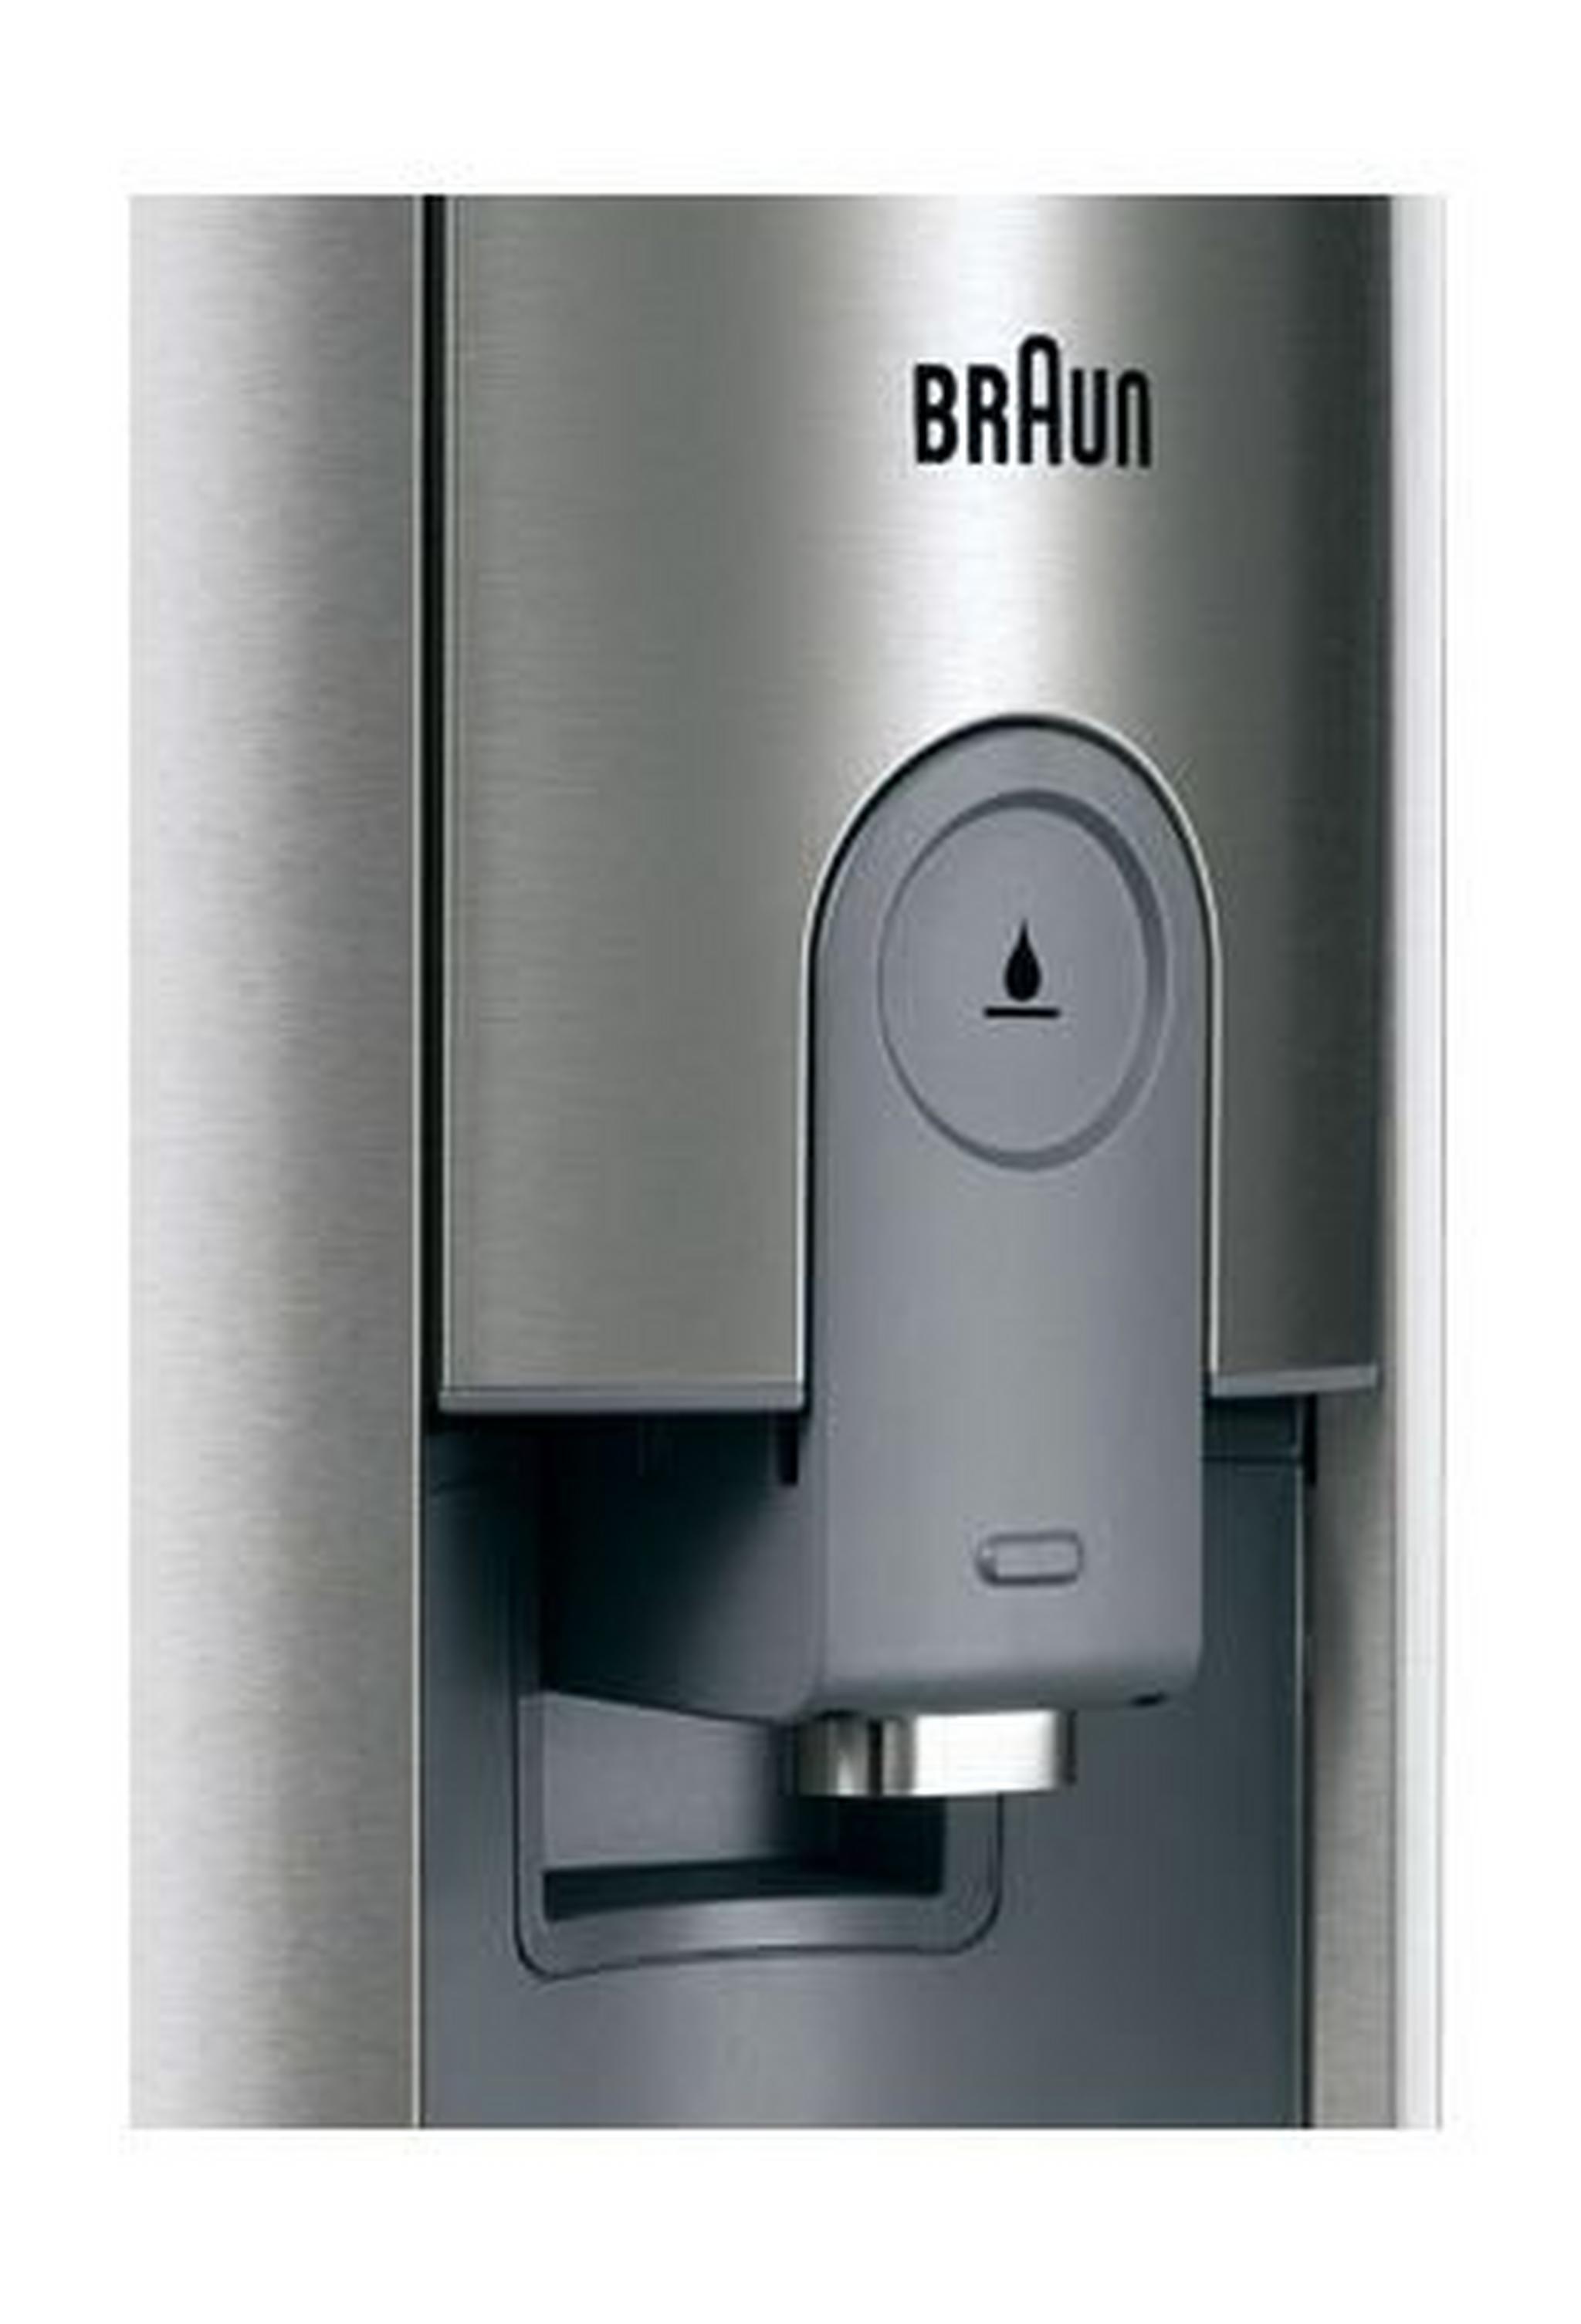 Braun 1000W 1.25L Multiquick 7- Spin Juicer (J700) - Stainless steel/Grey